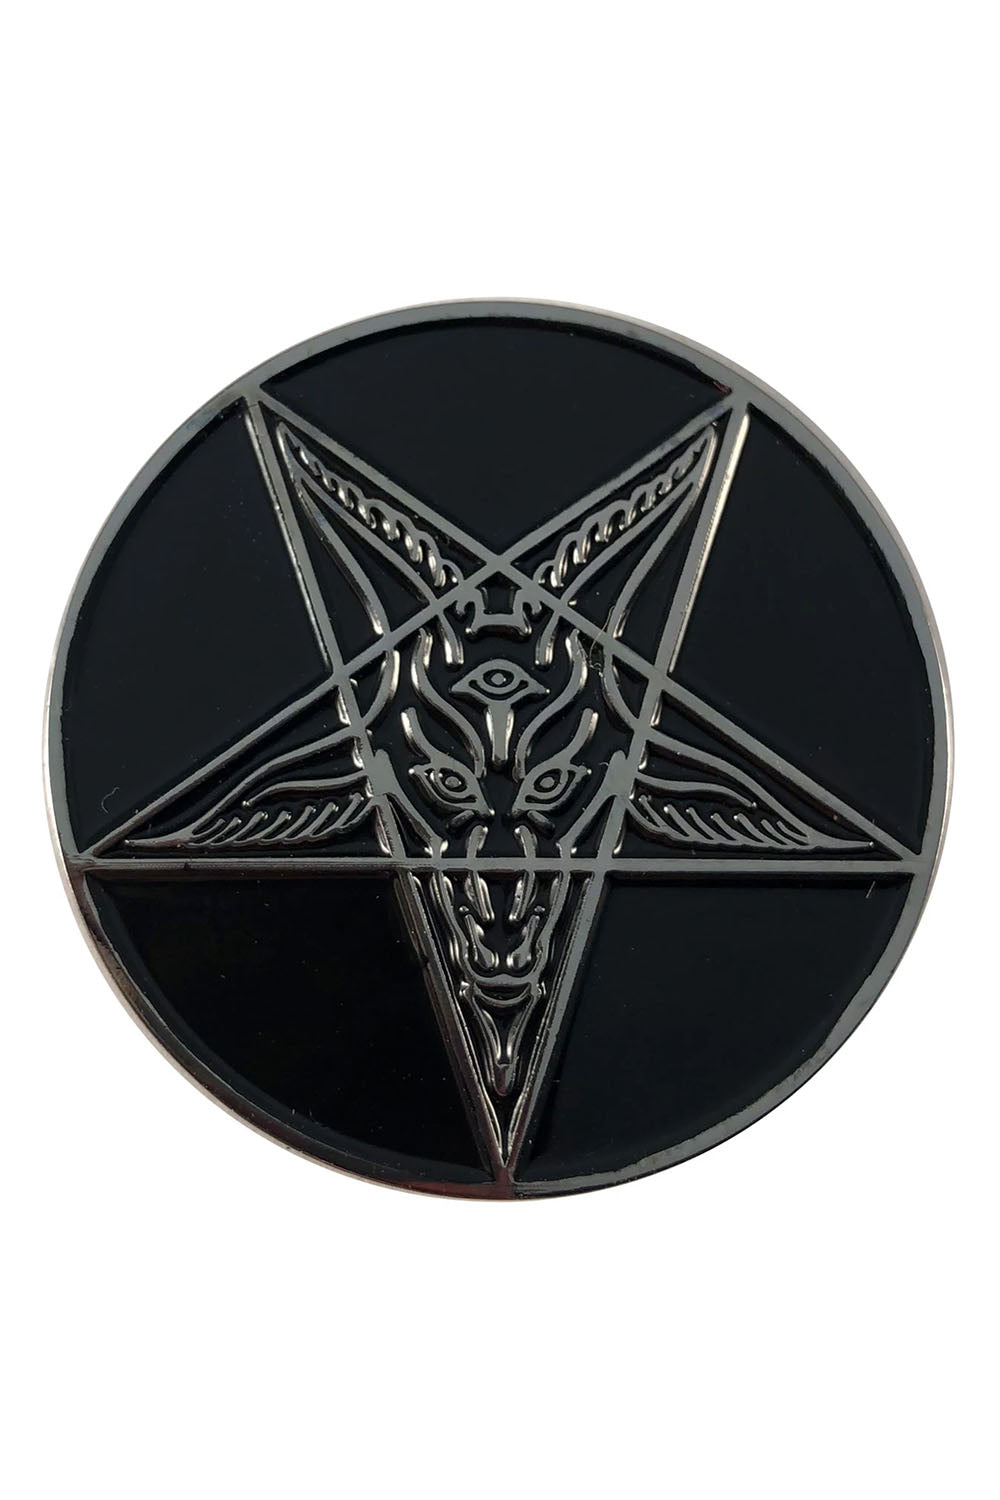 Goathead Baphomet Enamel Pin Badge [Black]